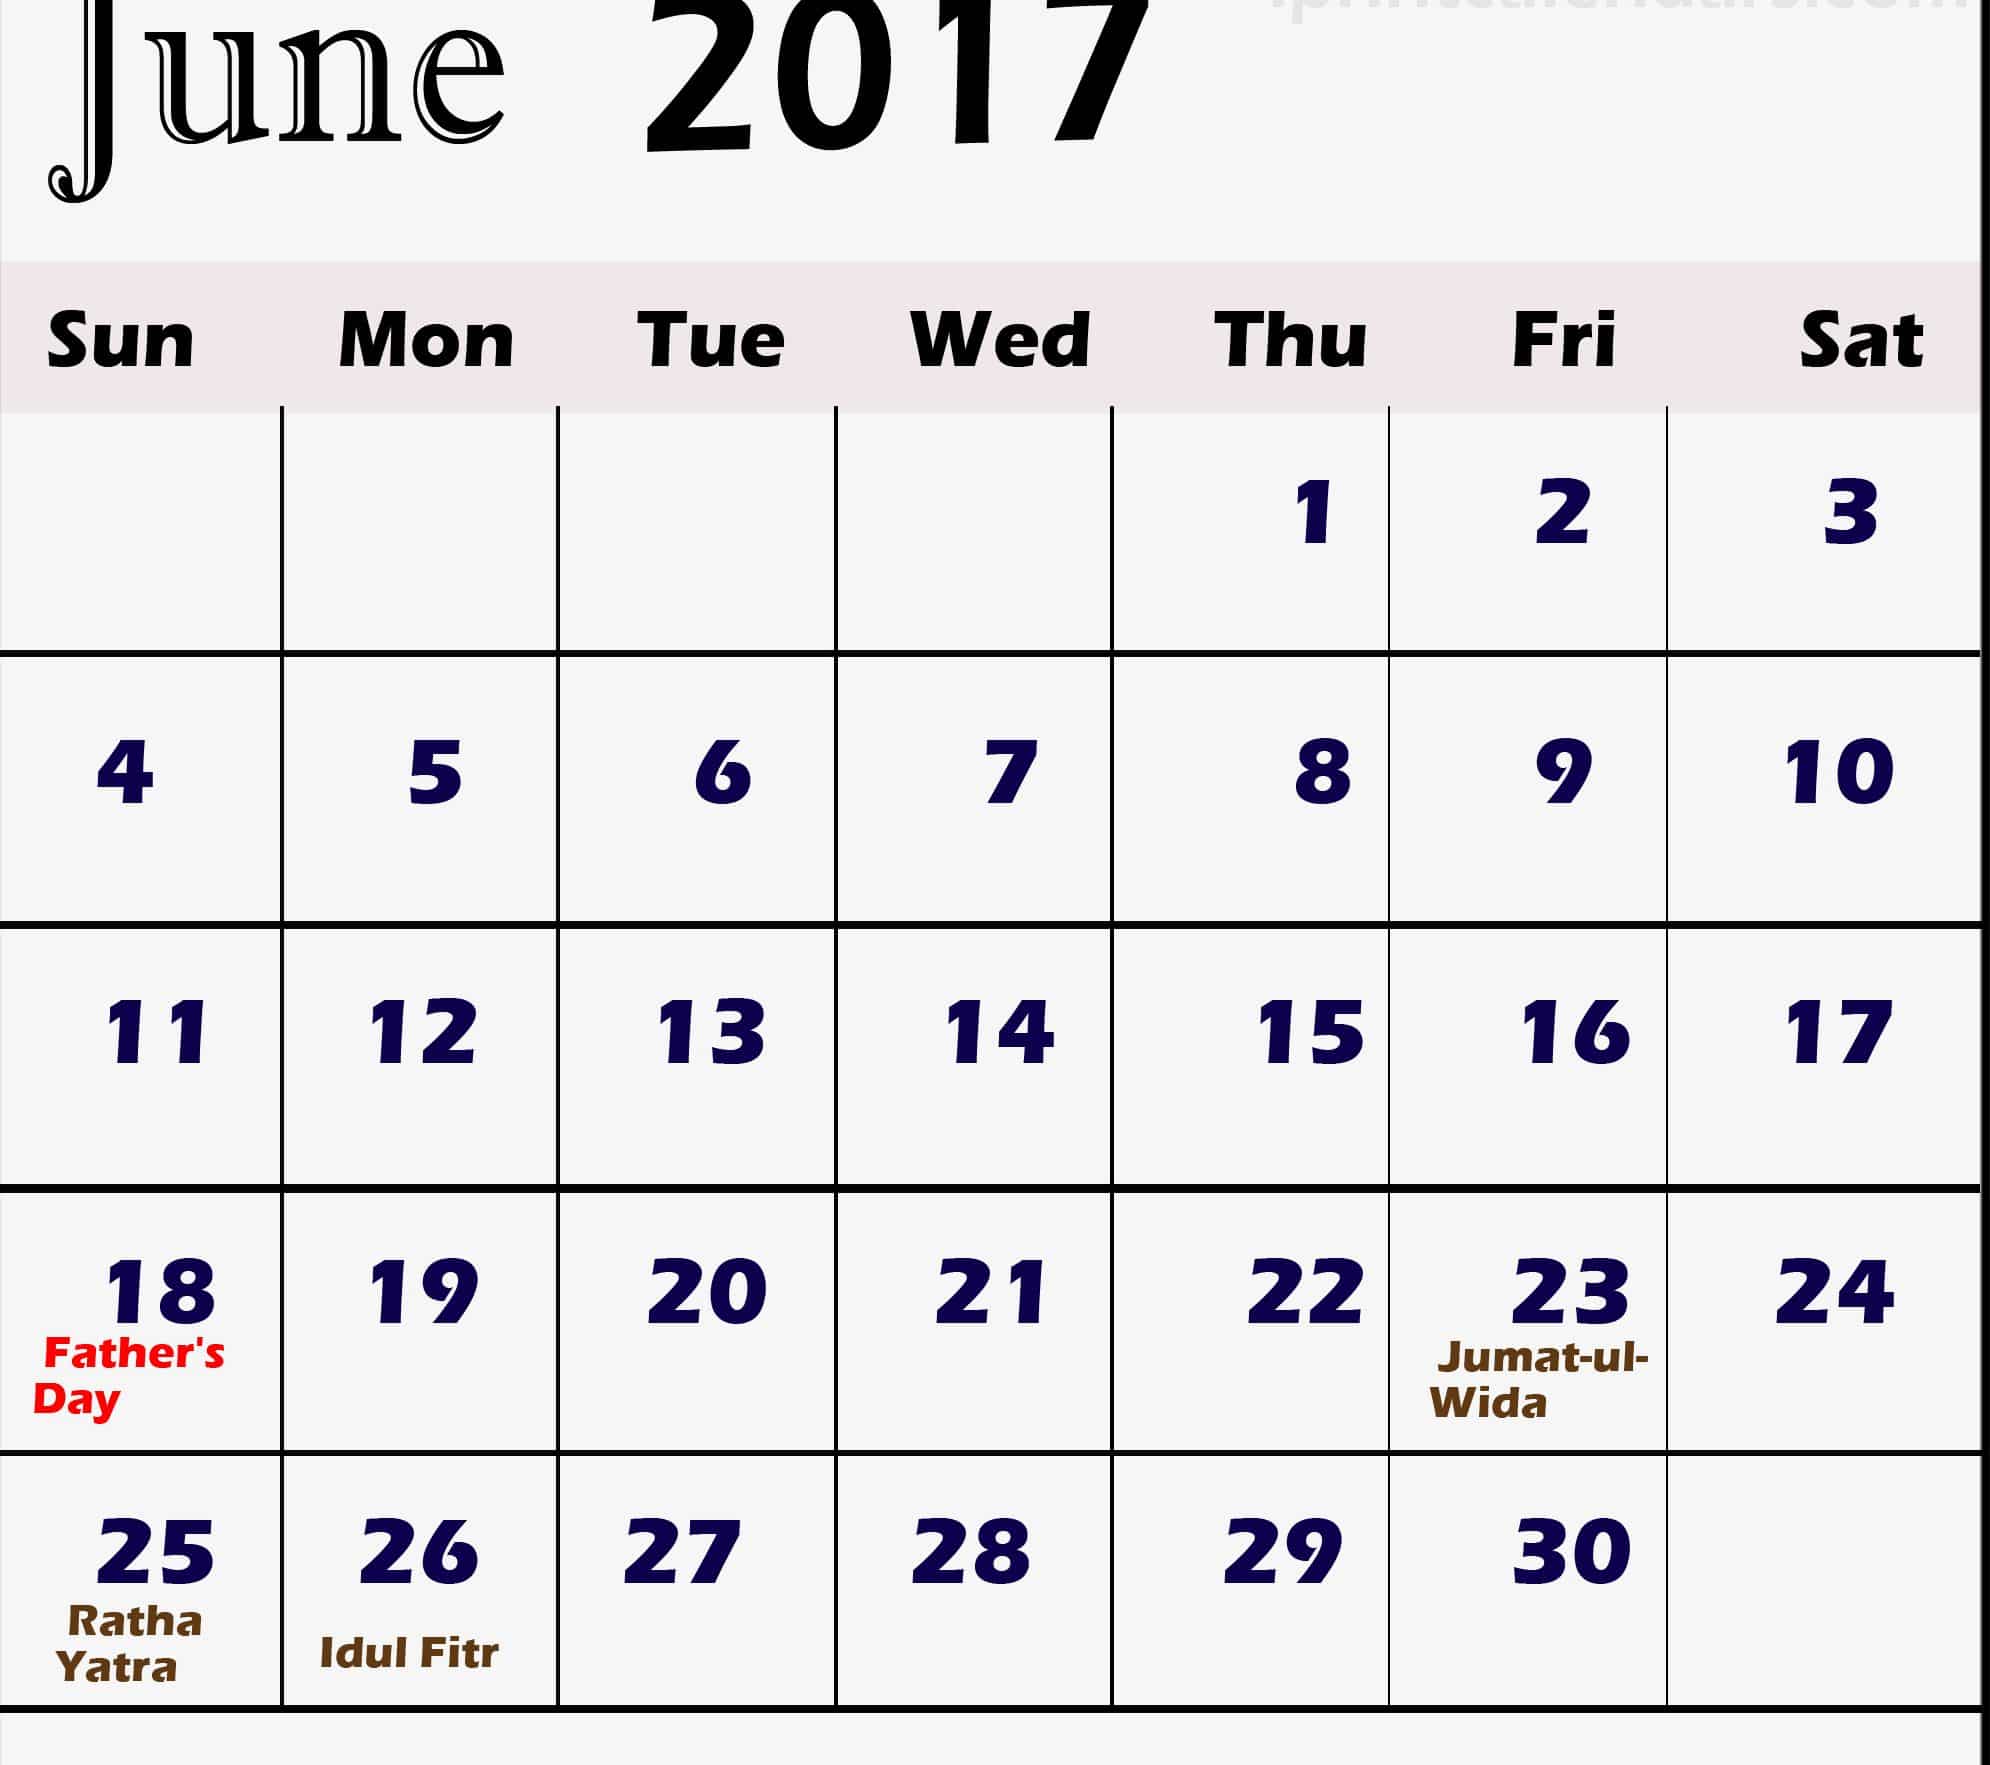 Save June 2017 calendar